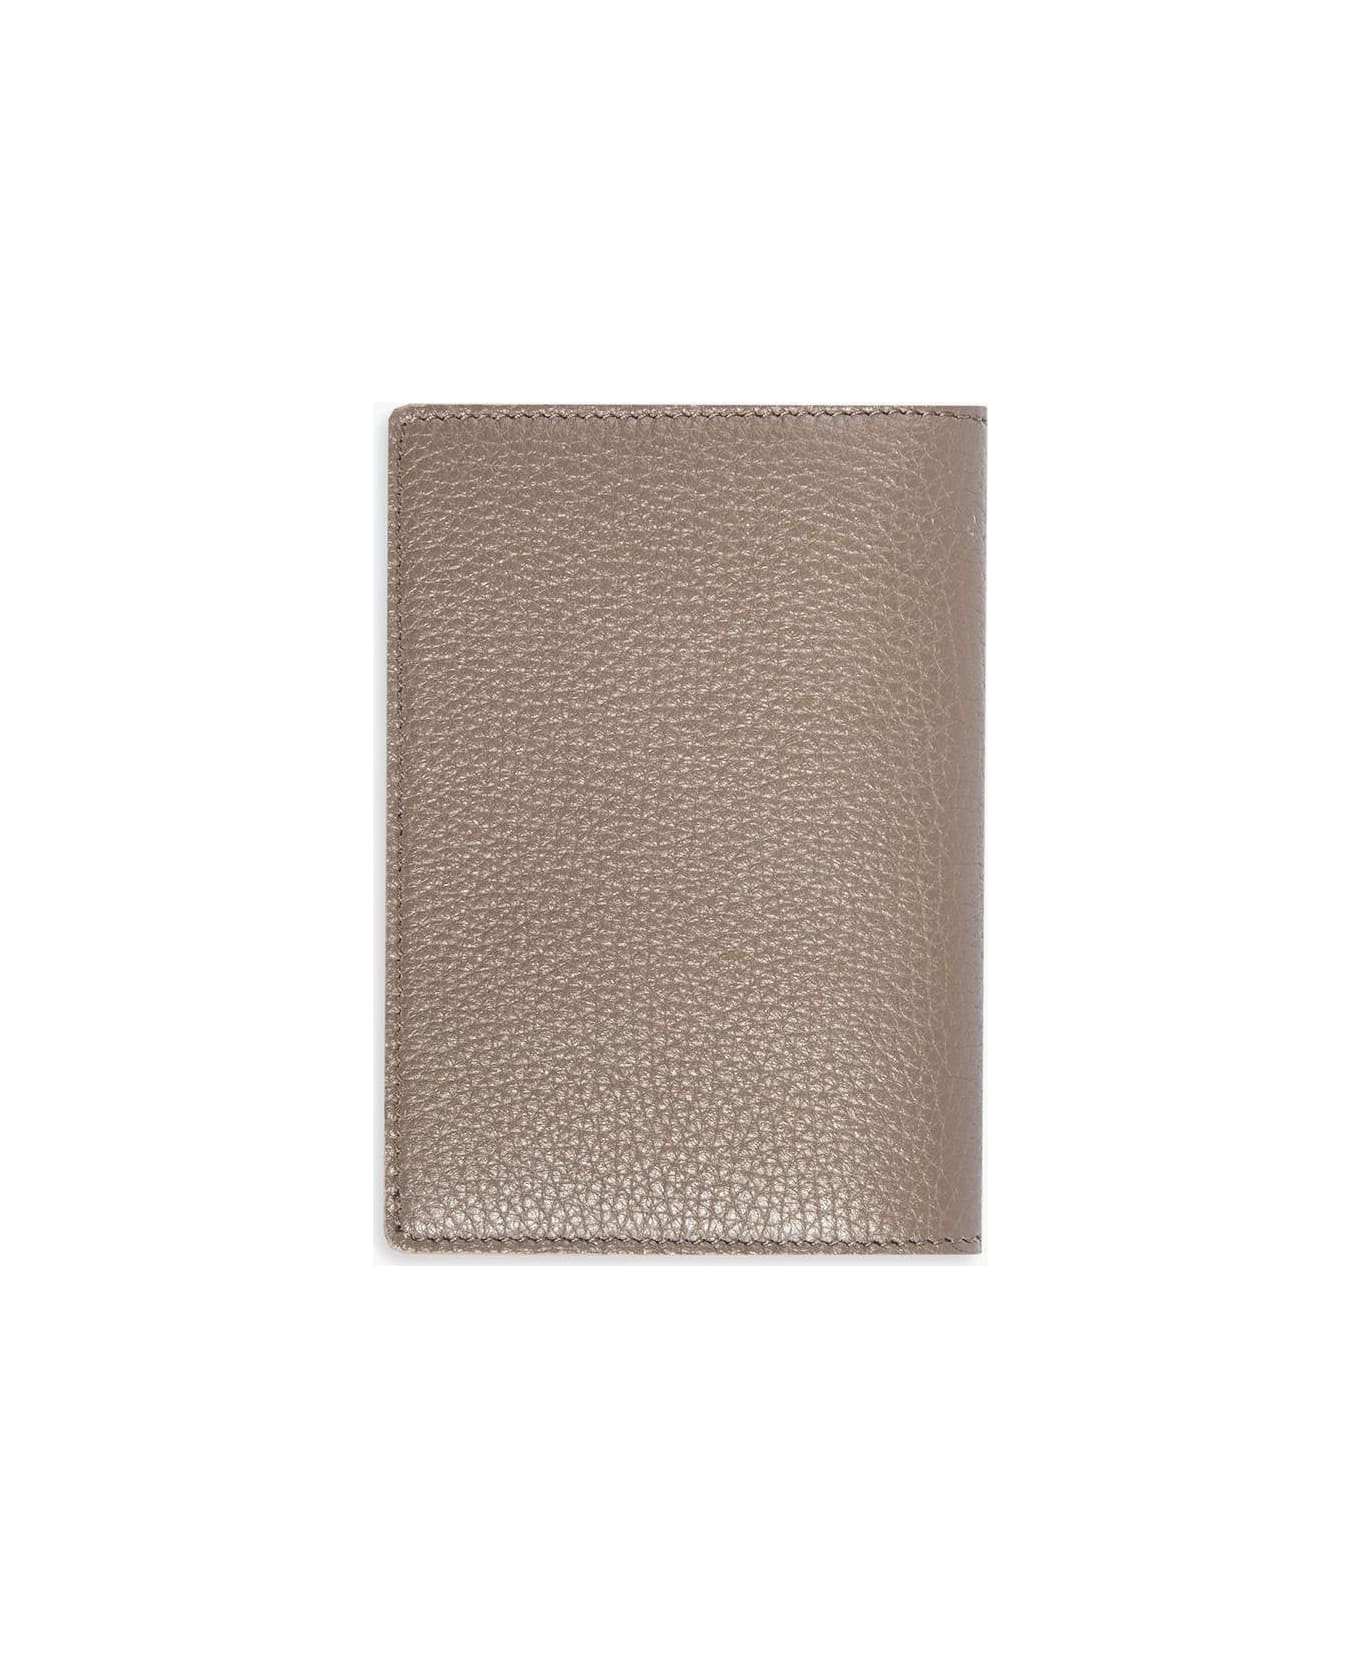 Larusmiani Passport Cover 'fiumicino' Wallet - Brown